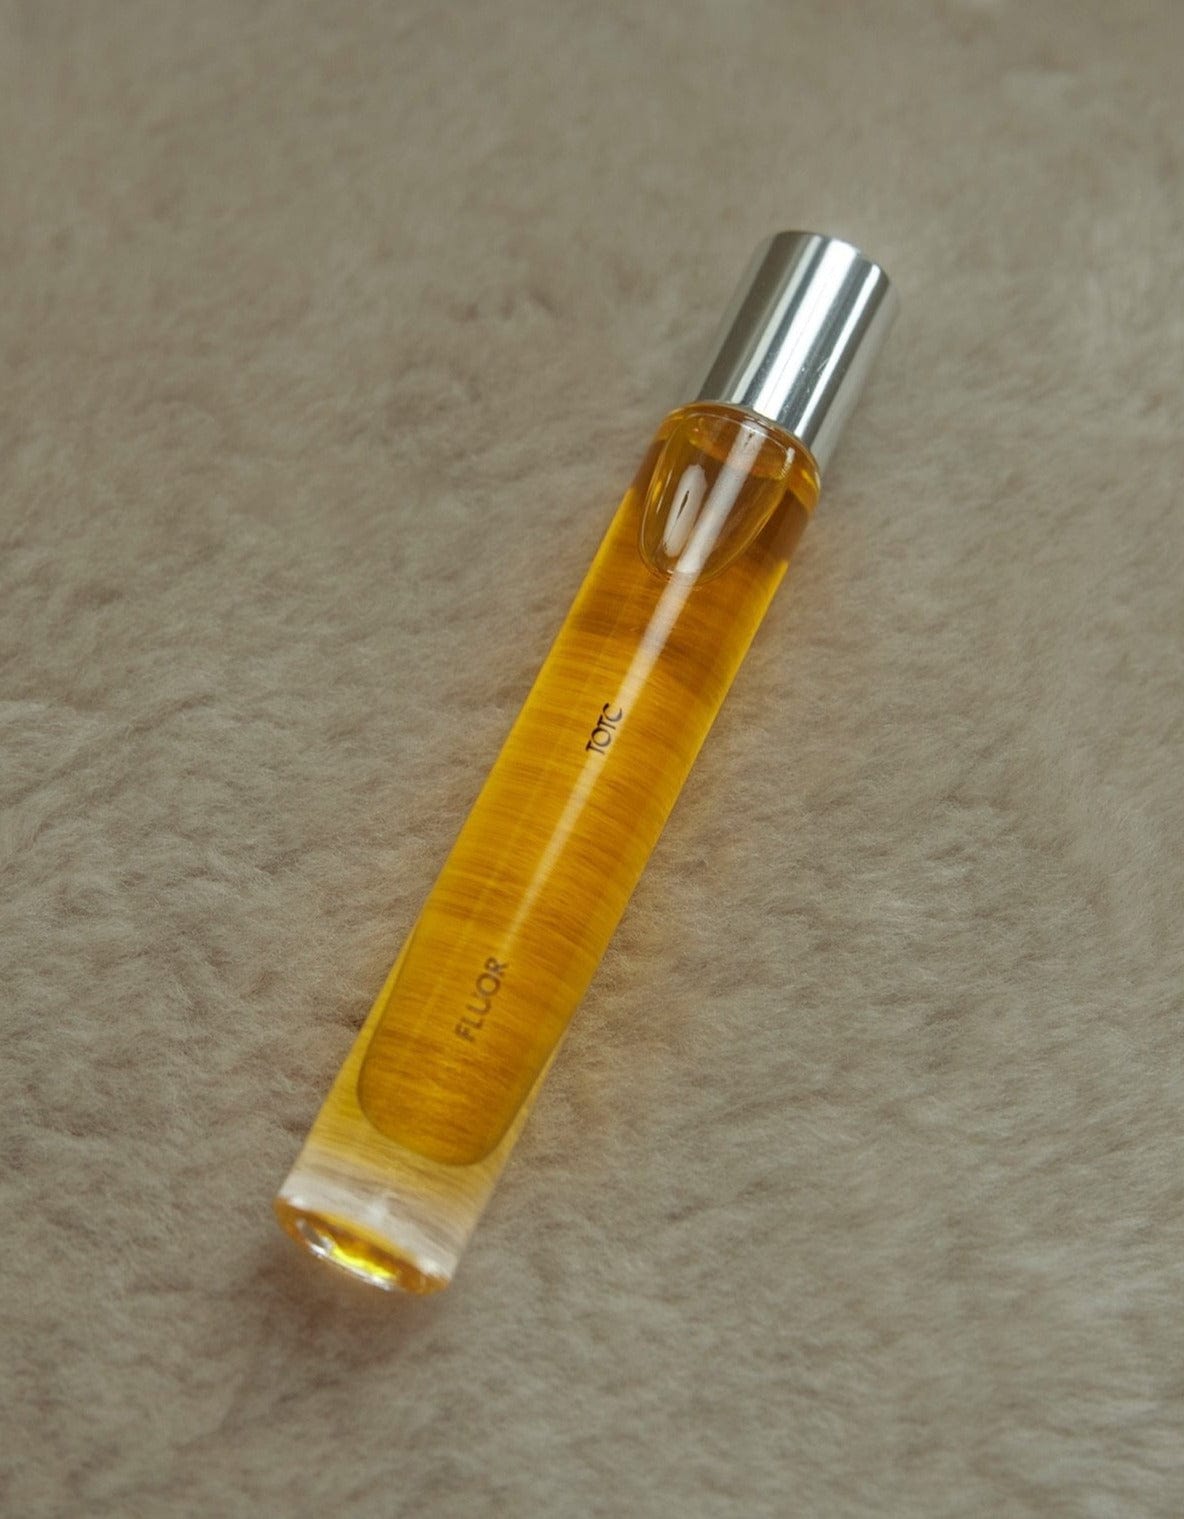 TOTC Pocket Perfume - Fluor sunja link - canada